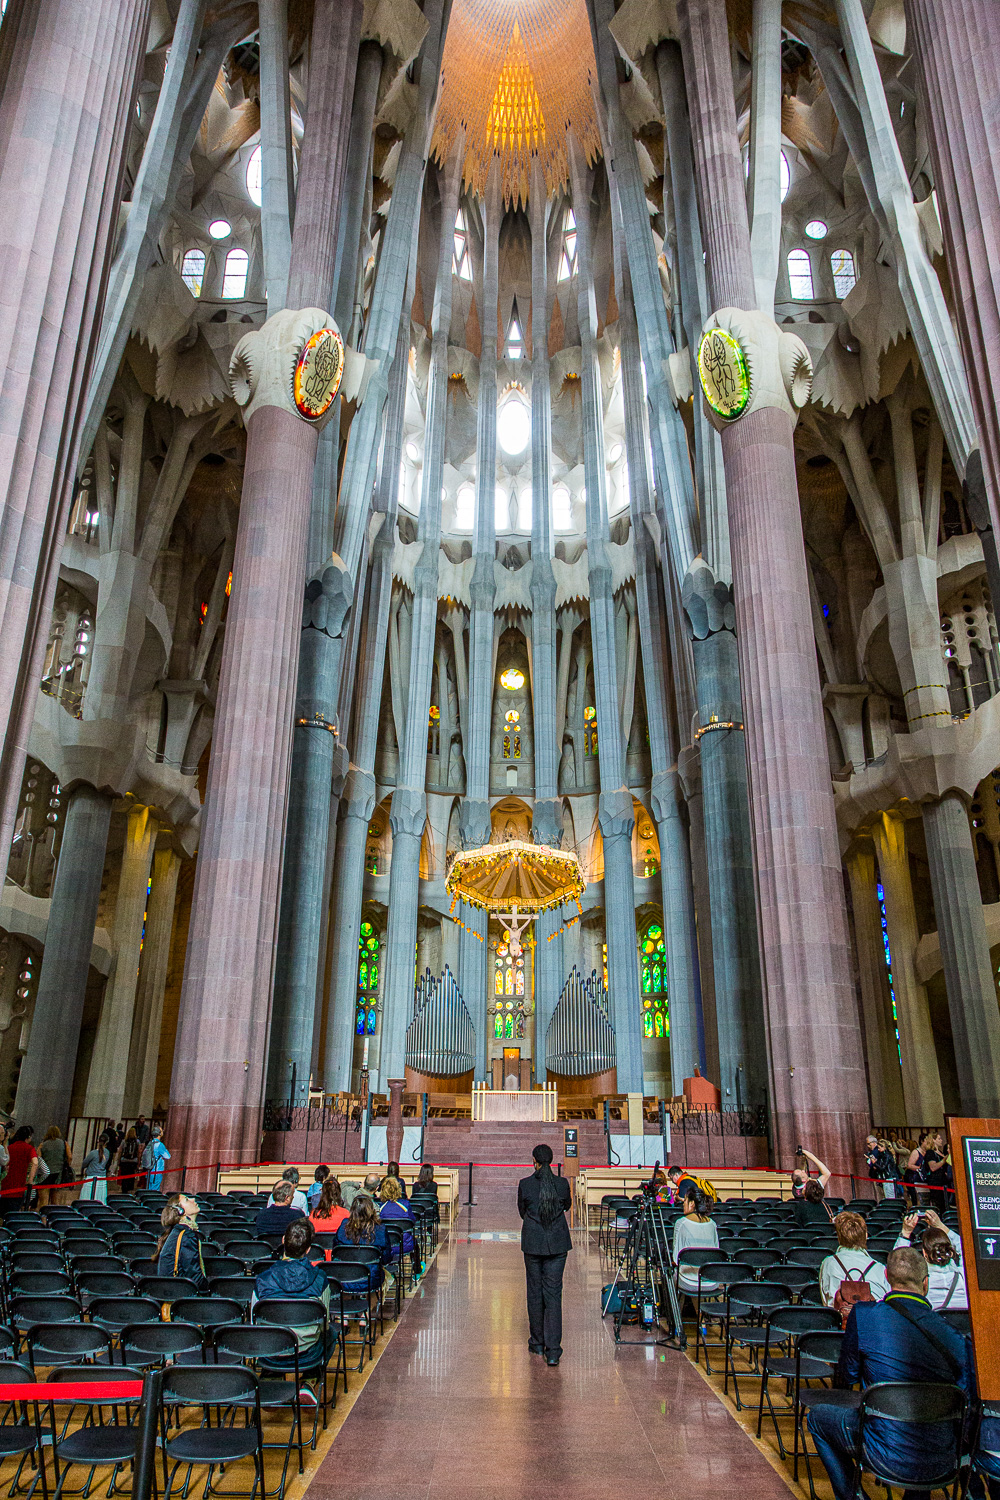 Sagrada Familia Basilica | Travelsnapz | Travel photos and stories